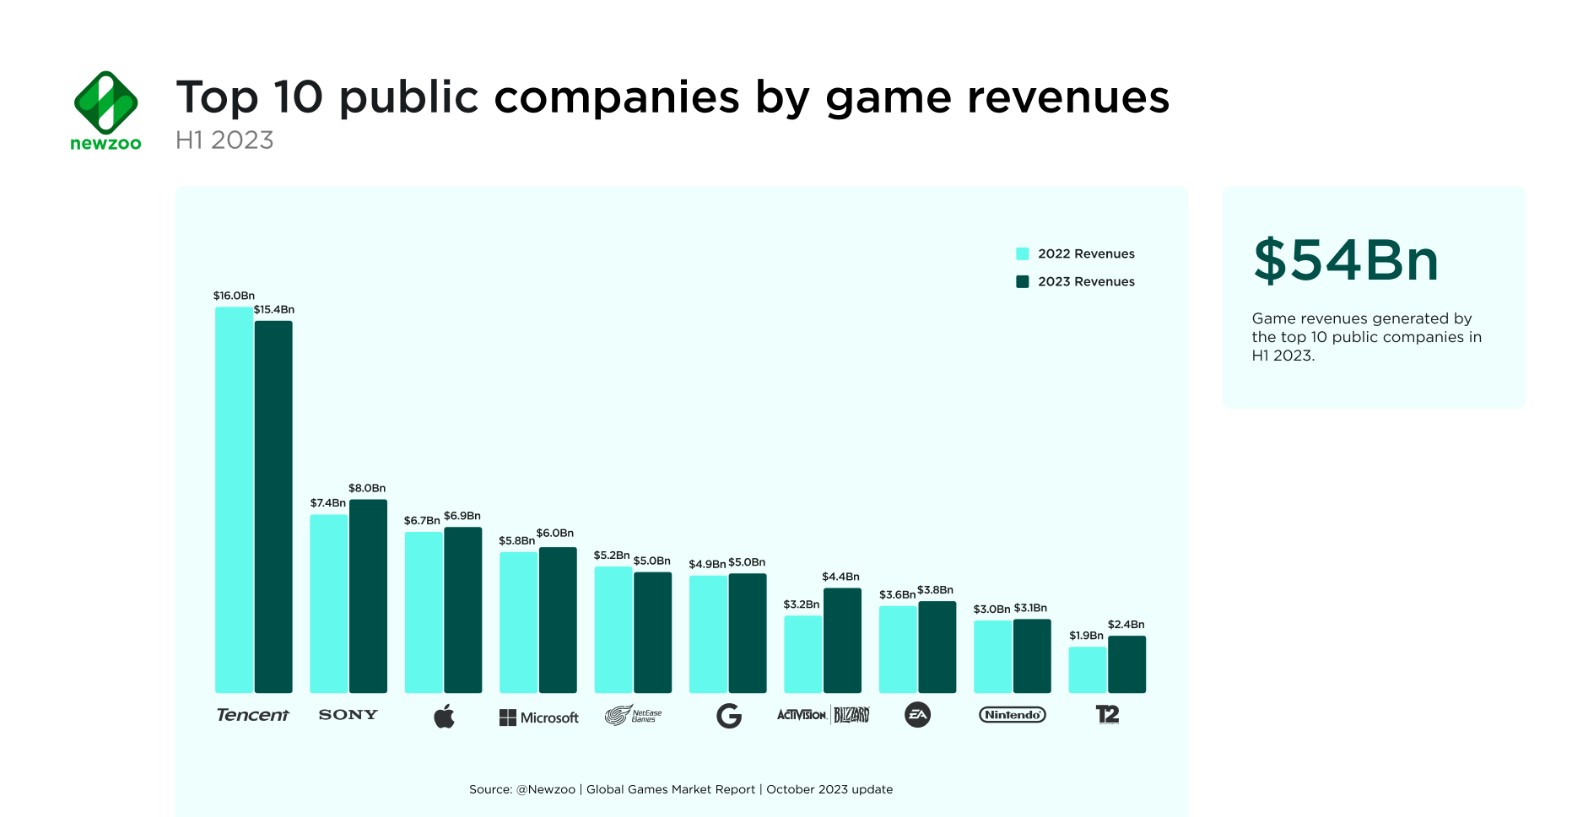 Top gaming revenue companies H1 2023